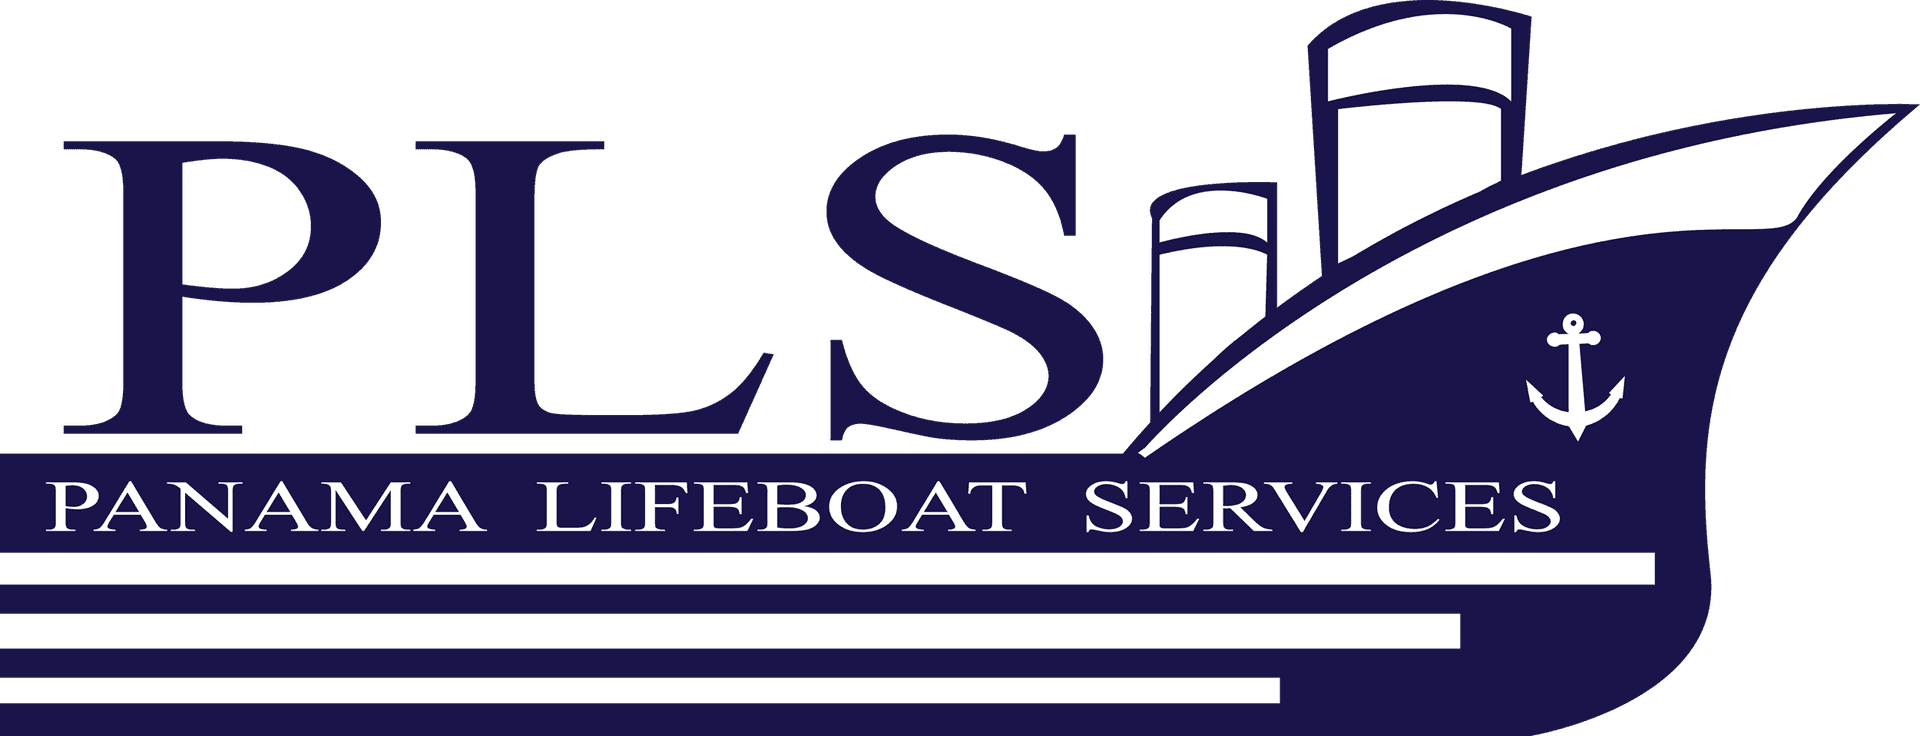 Panama Lifeboat Services Logo PNG